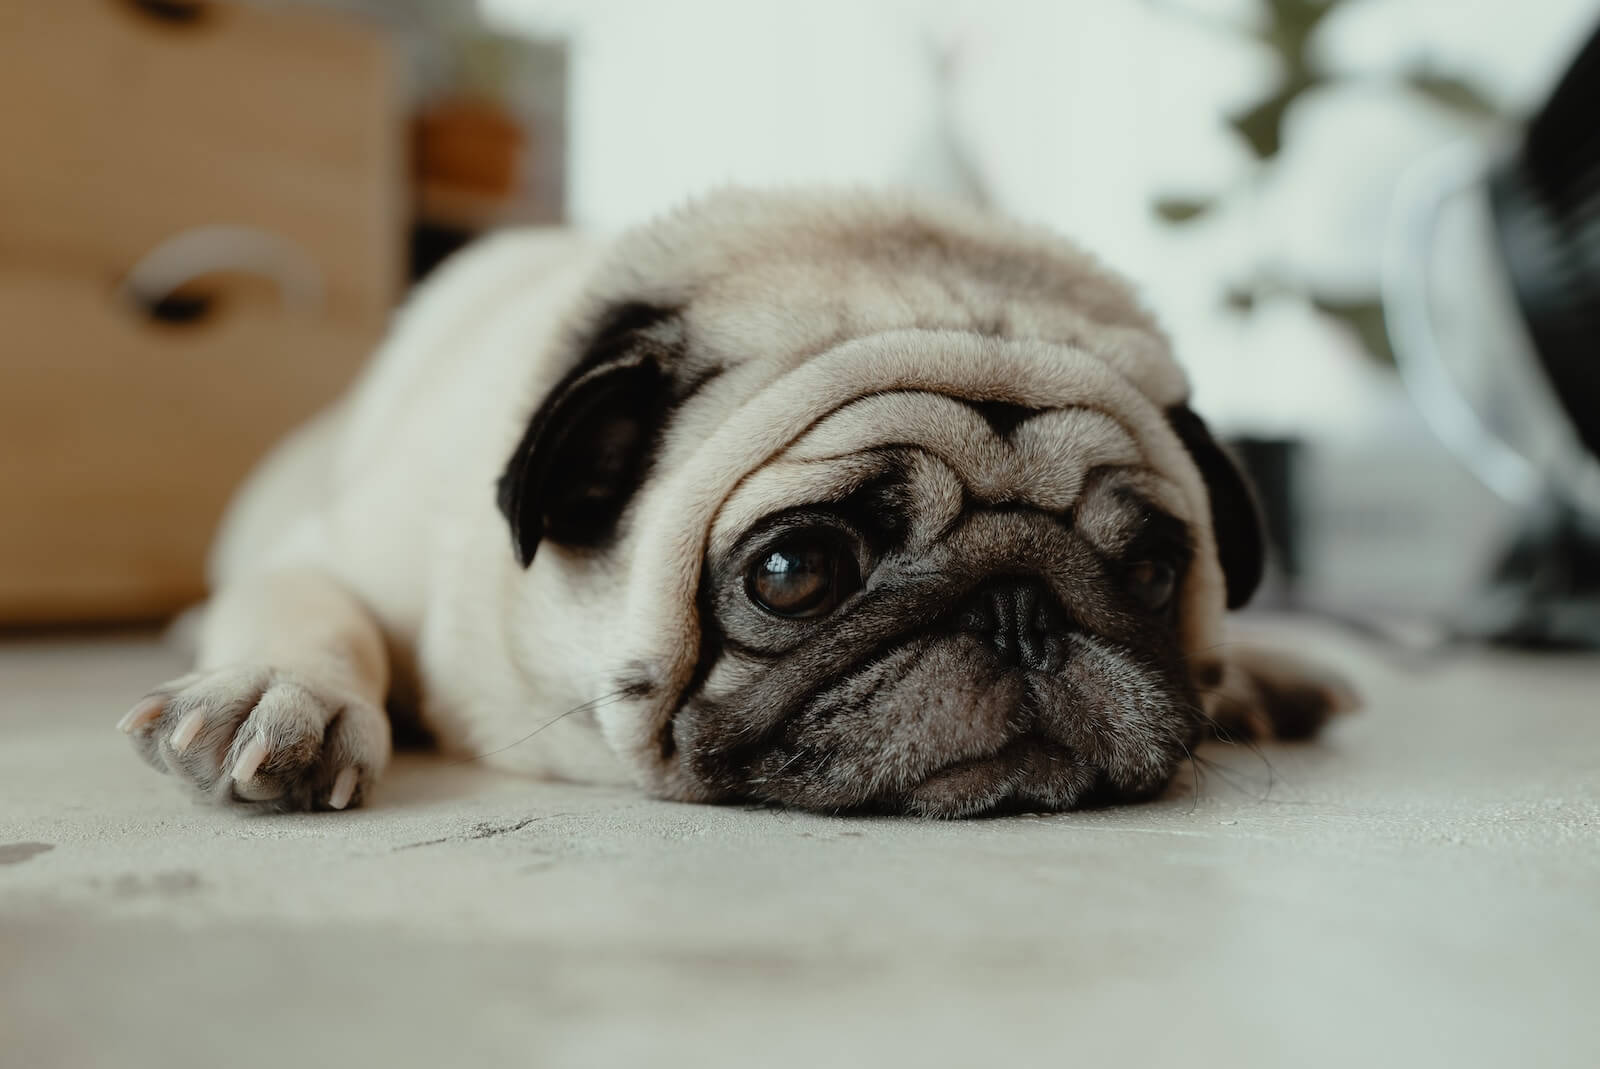 Sad dog, a Pug, lying on the floor